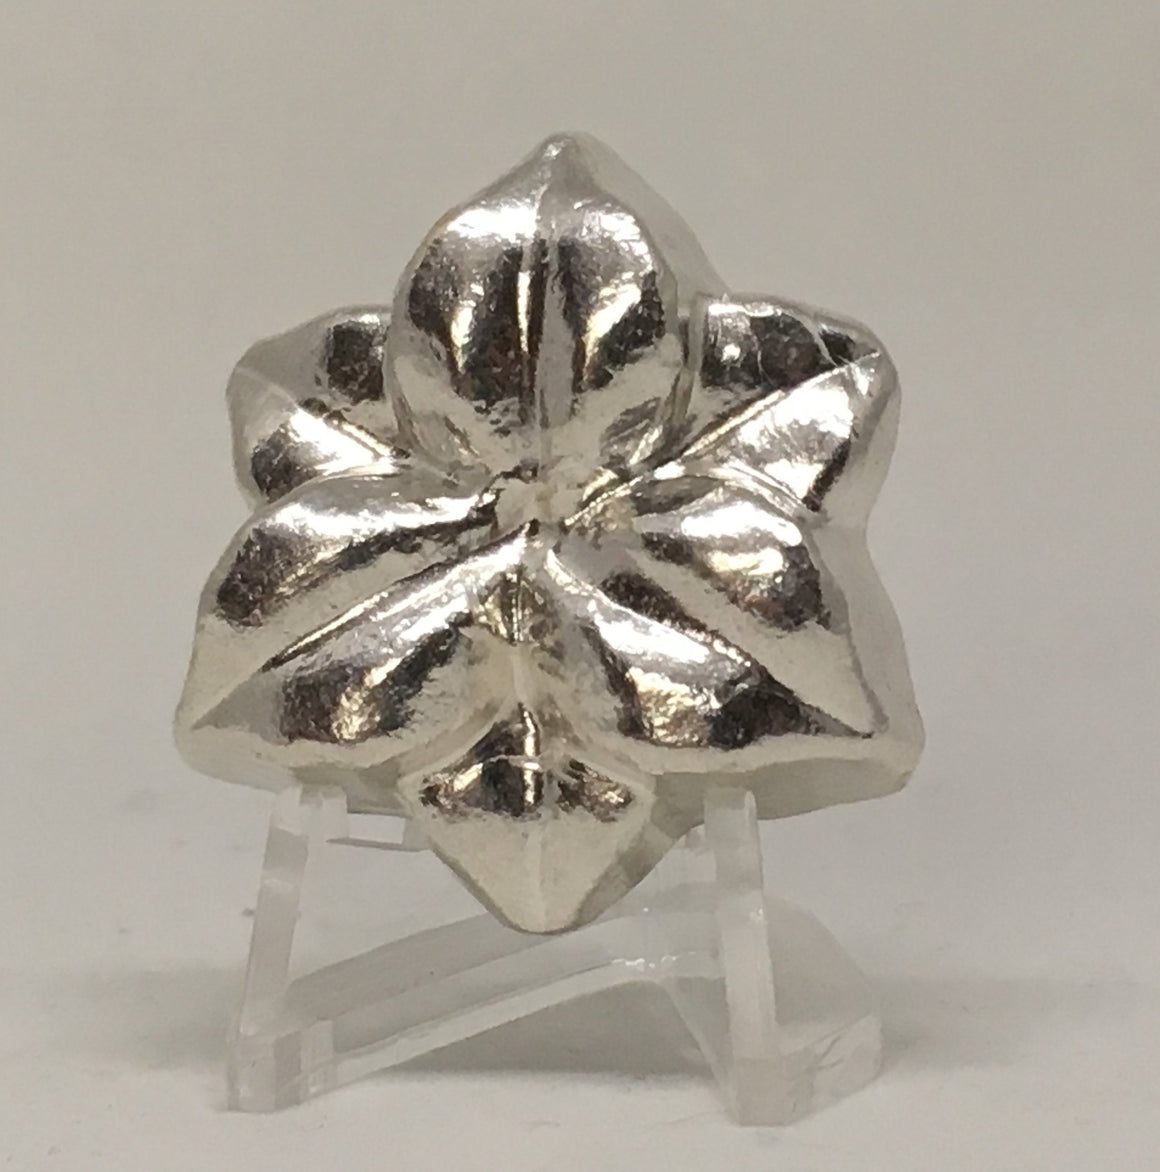 Trillium Flower by Pheli Mint, Hand Poured 3oz, .999 Silver